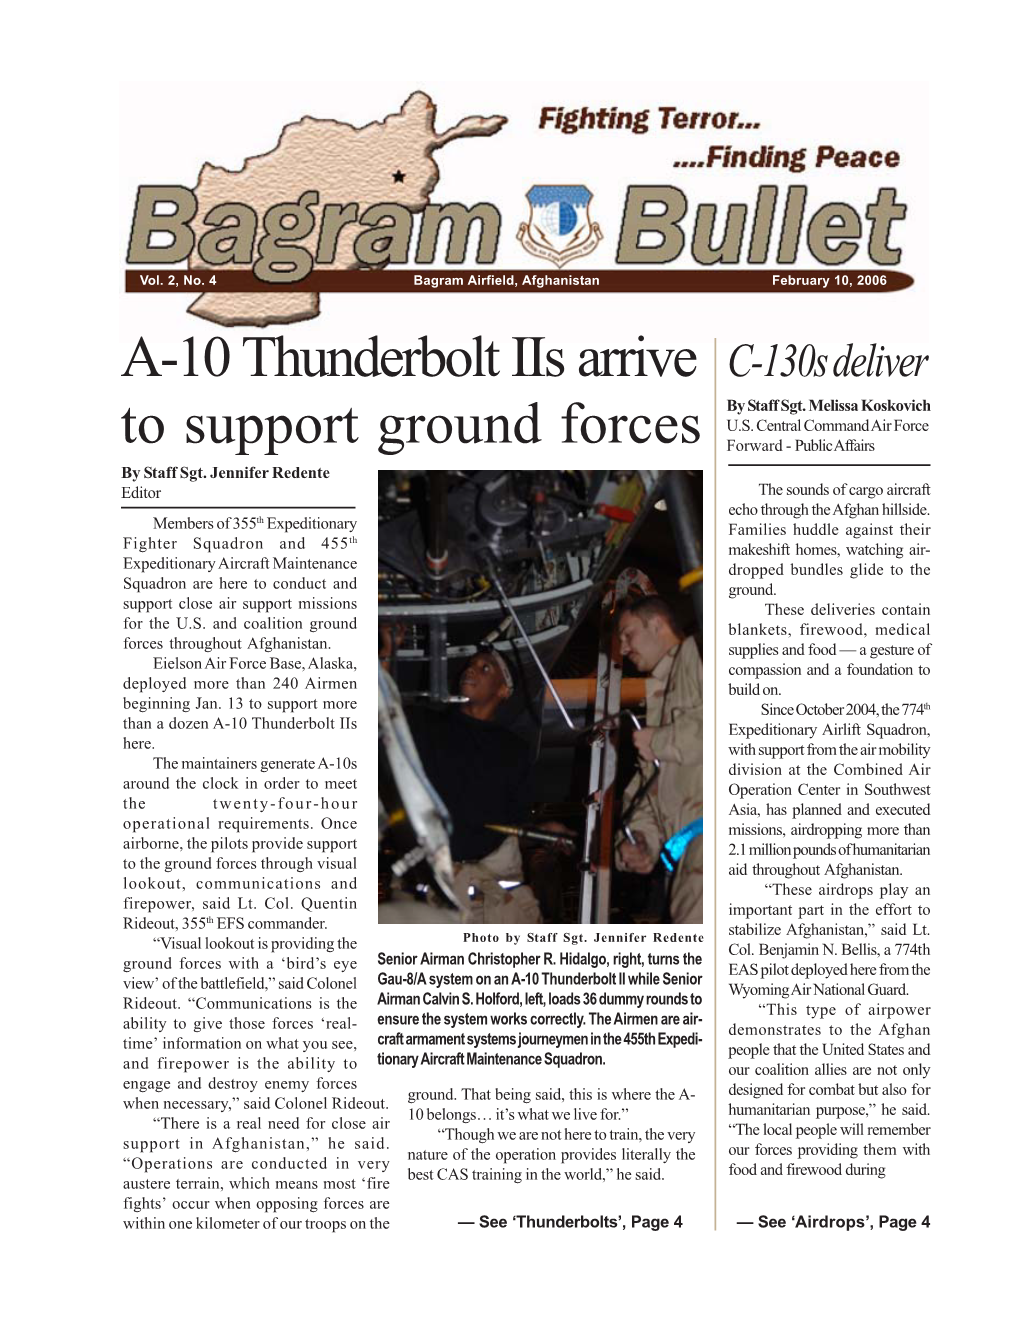 Bagram Bullet Fighting Terror, Finding Peace February 10, 2006